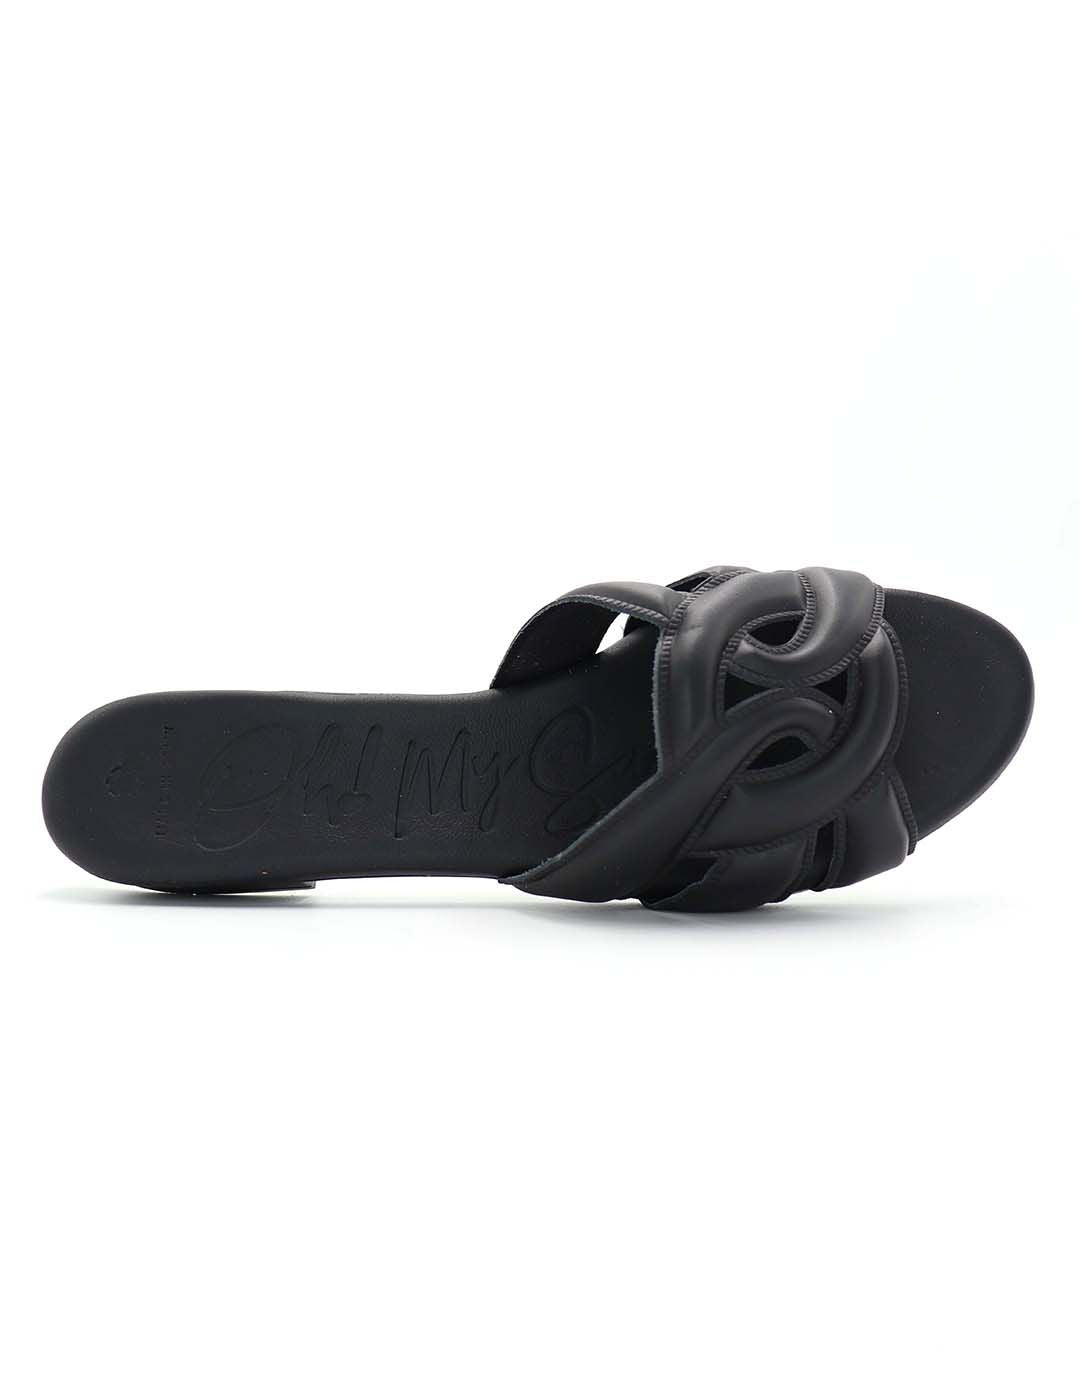 Sandals 4963 negro